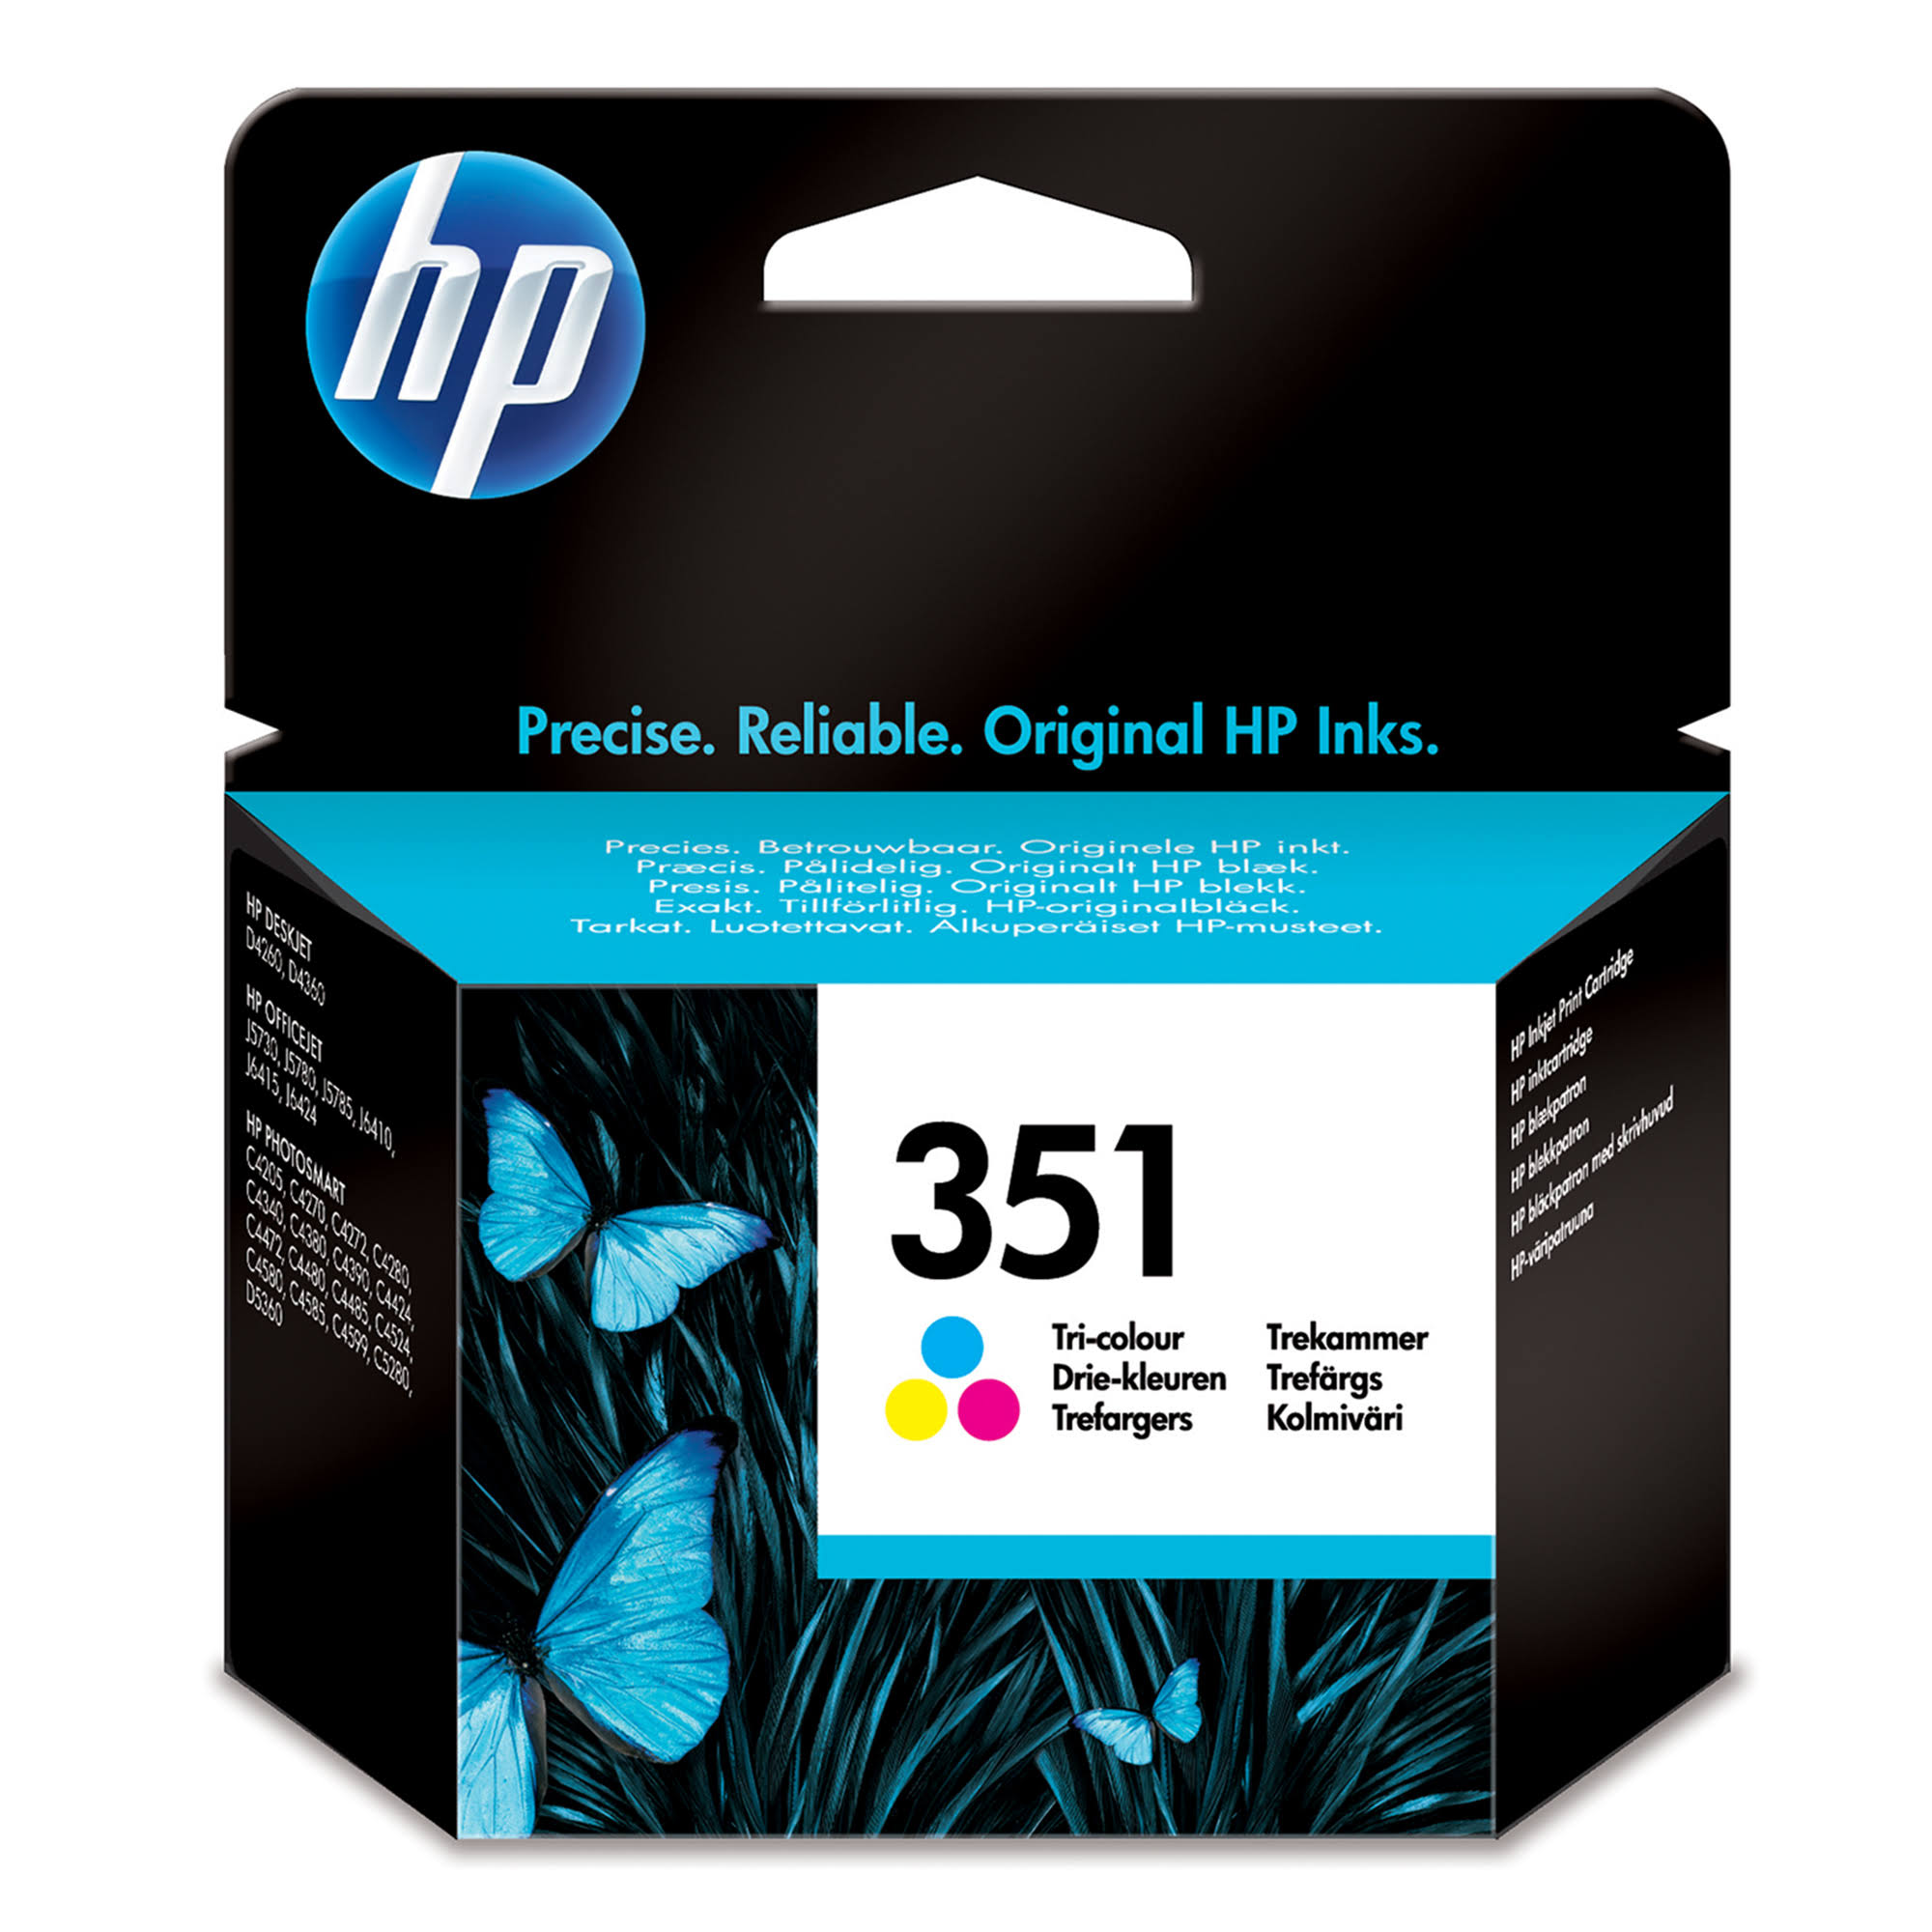 HP Printer Ink Cartridge - Tri-Colour CMY 351